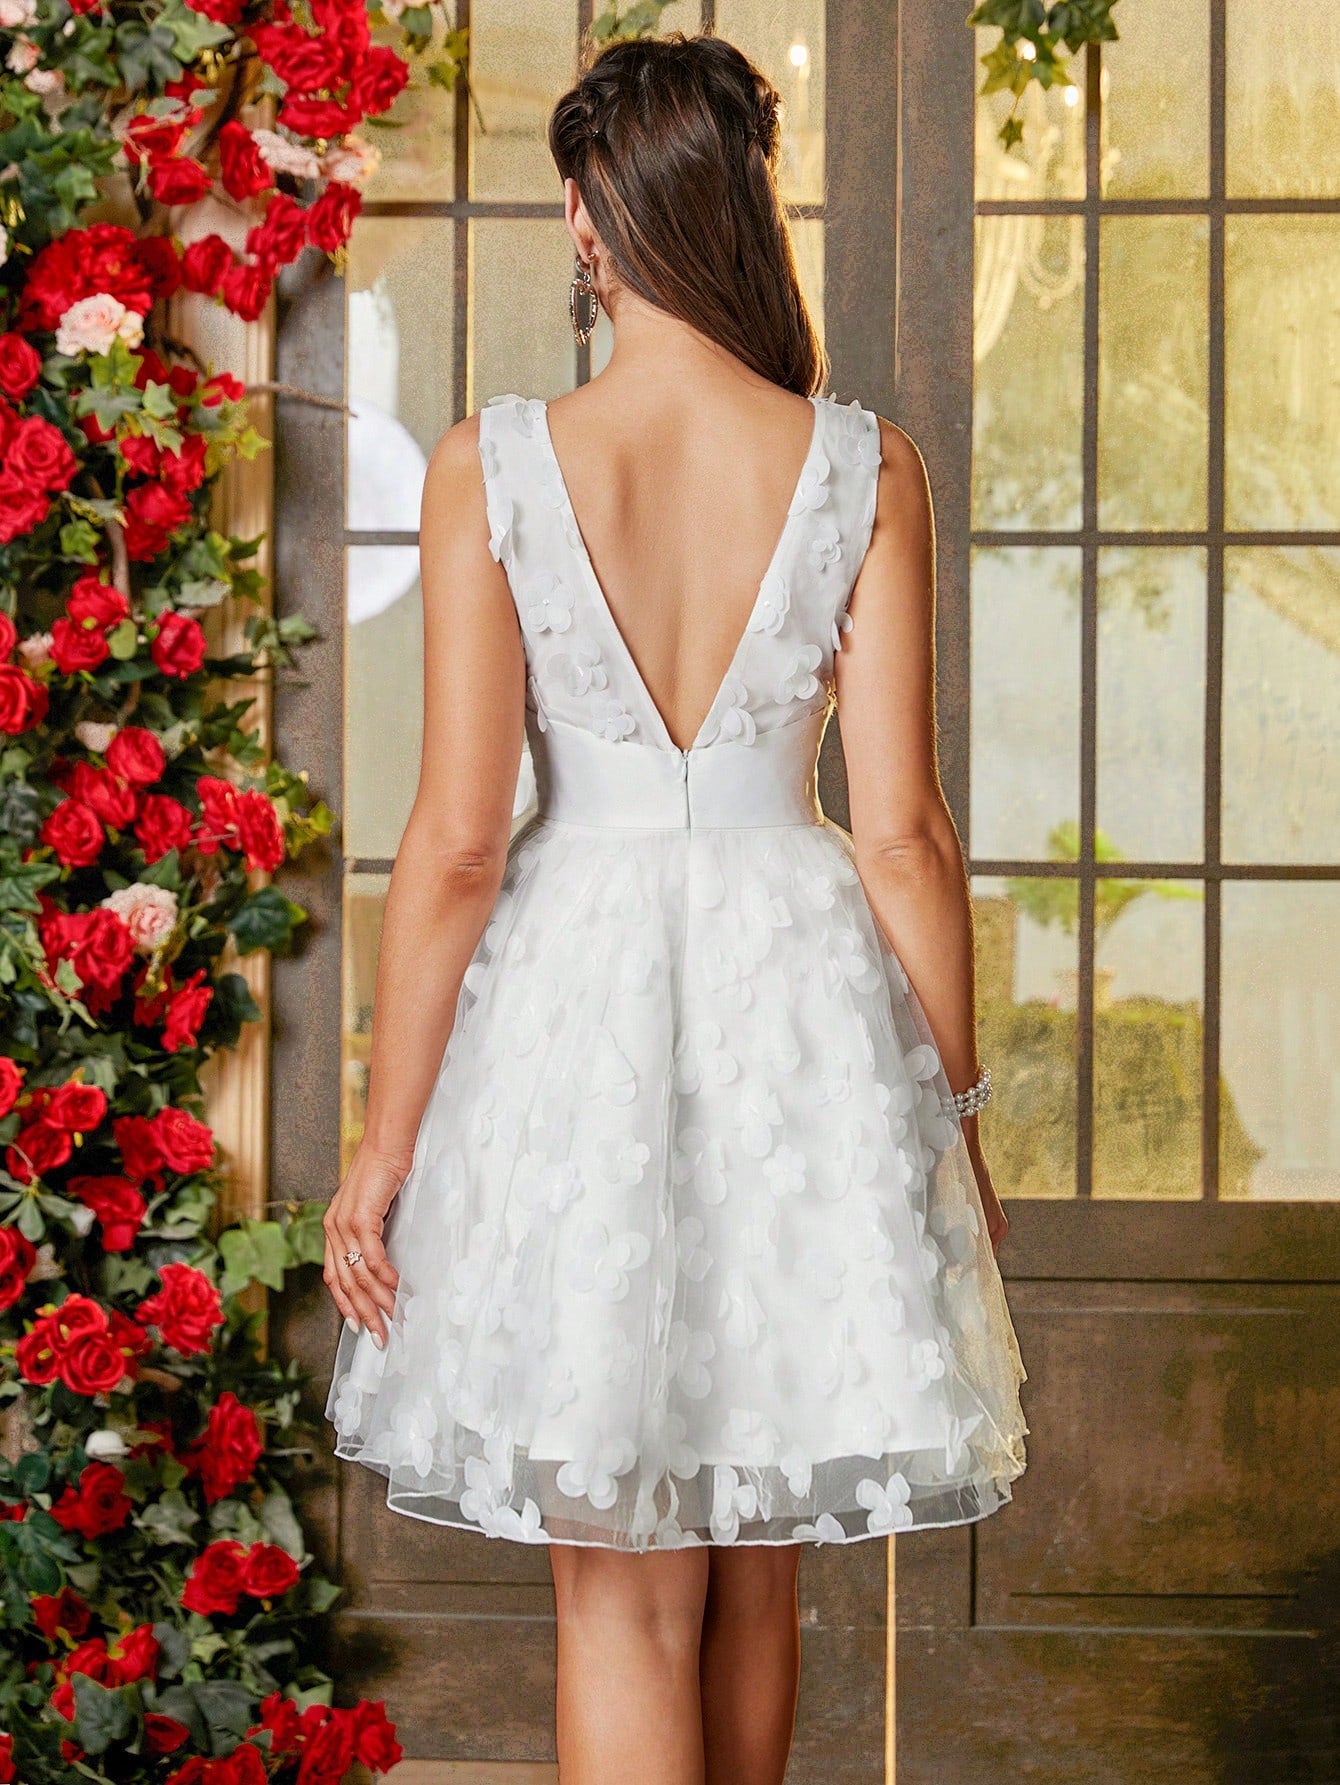 Stunning Floral Applique Mesh Knee Length Dress: Ideal for Weddings & Formal Events